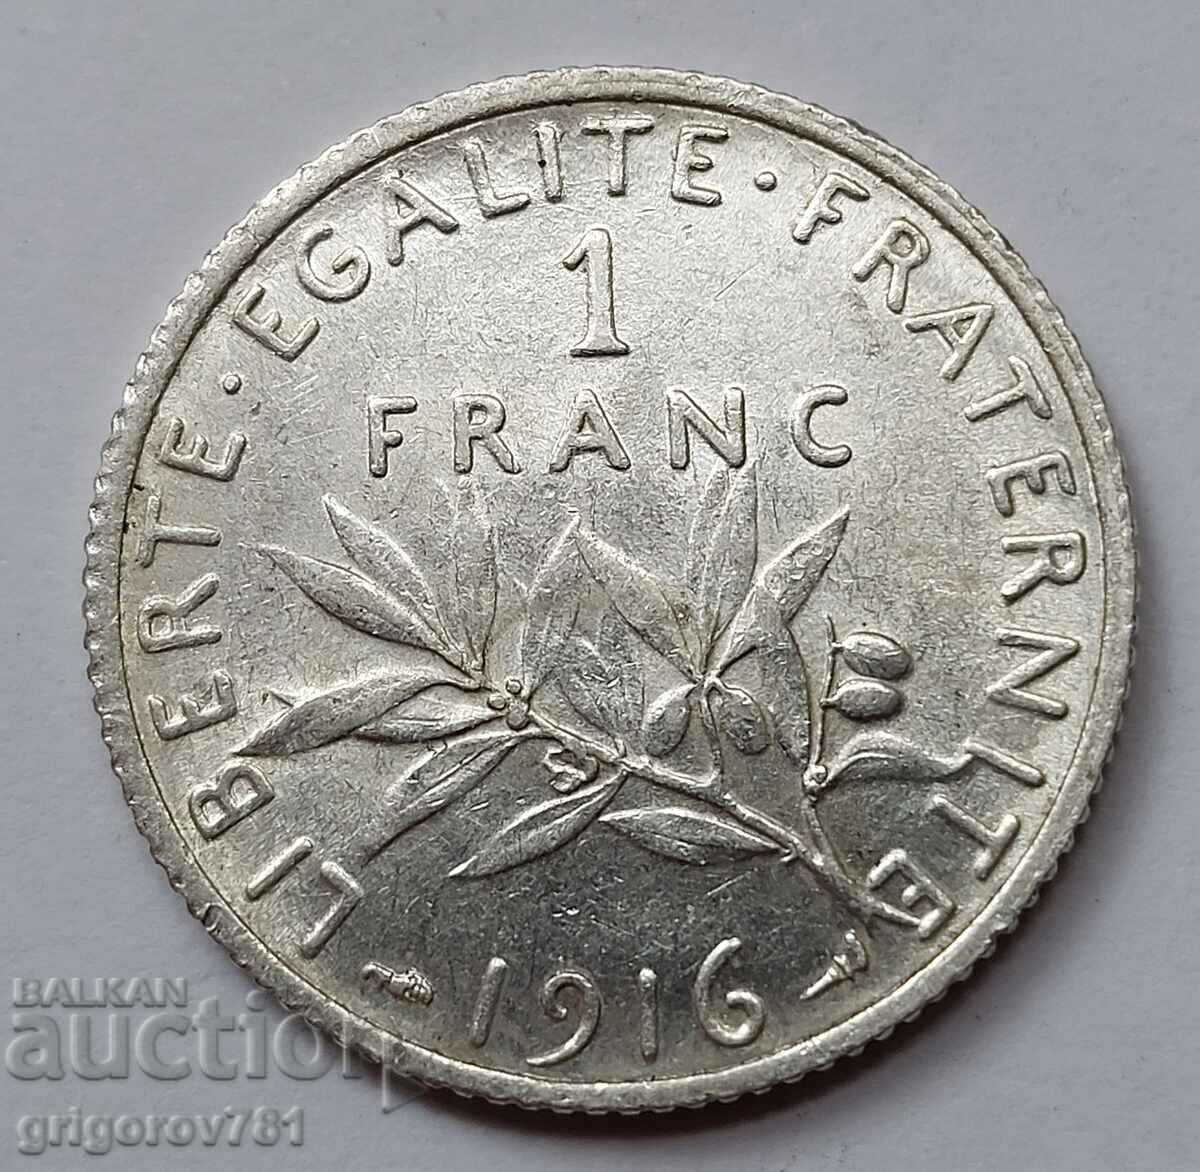 1 franc silver France 1916 - silver coin №11